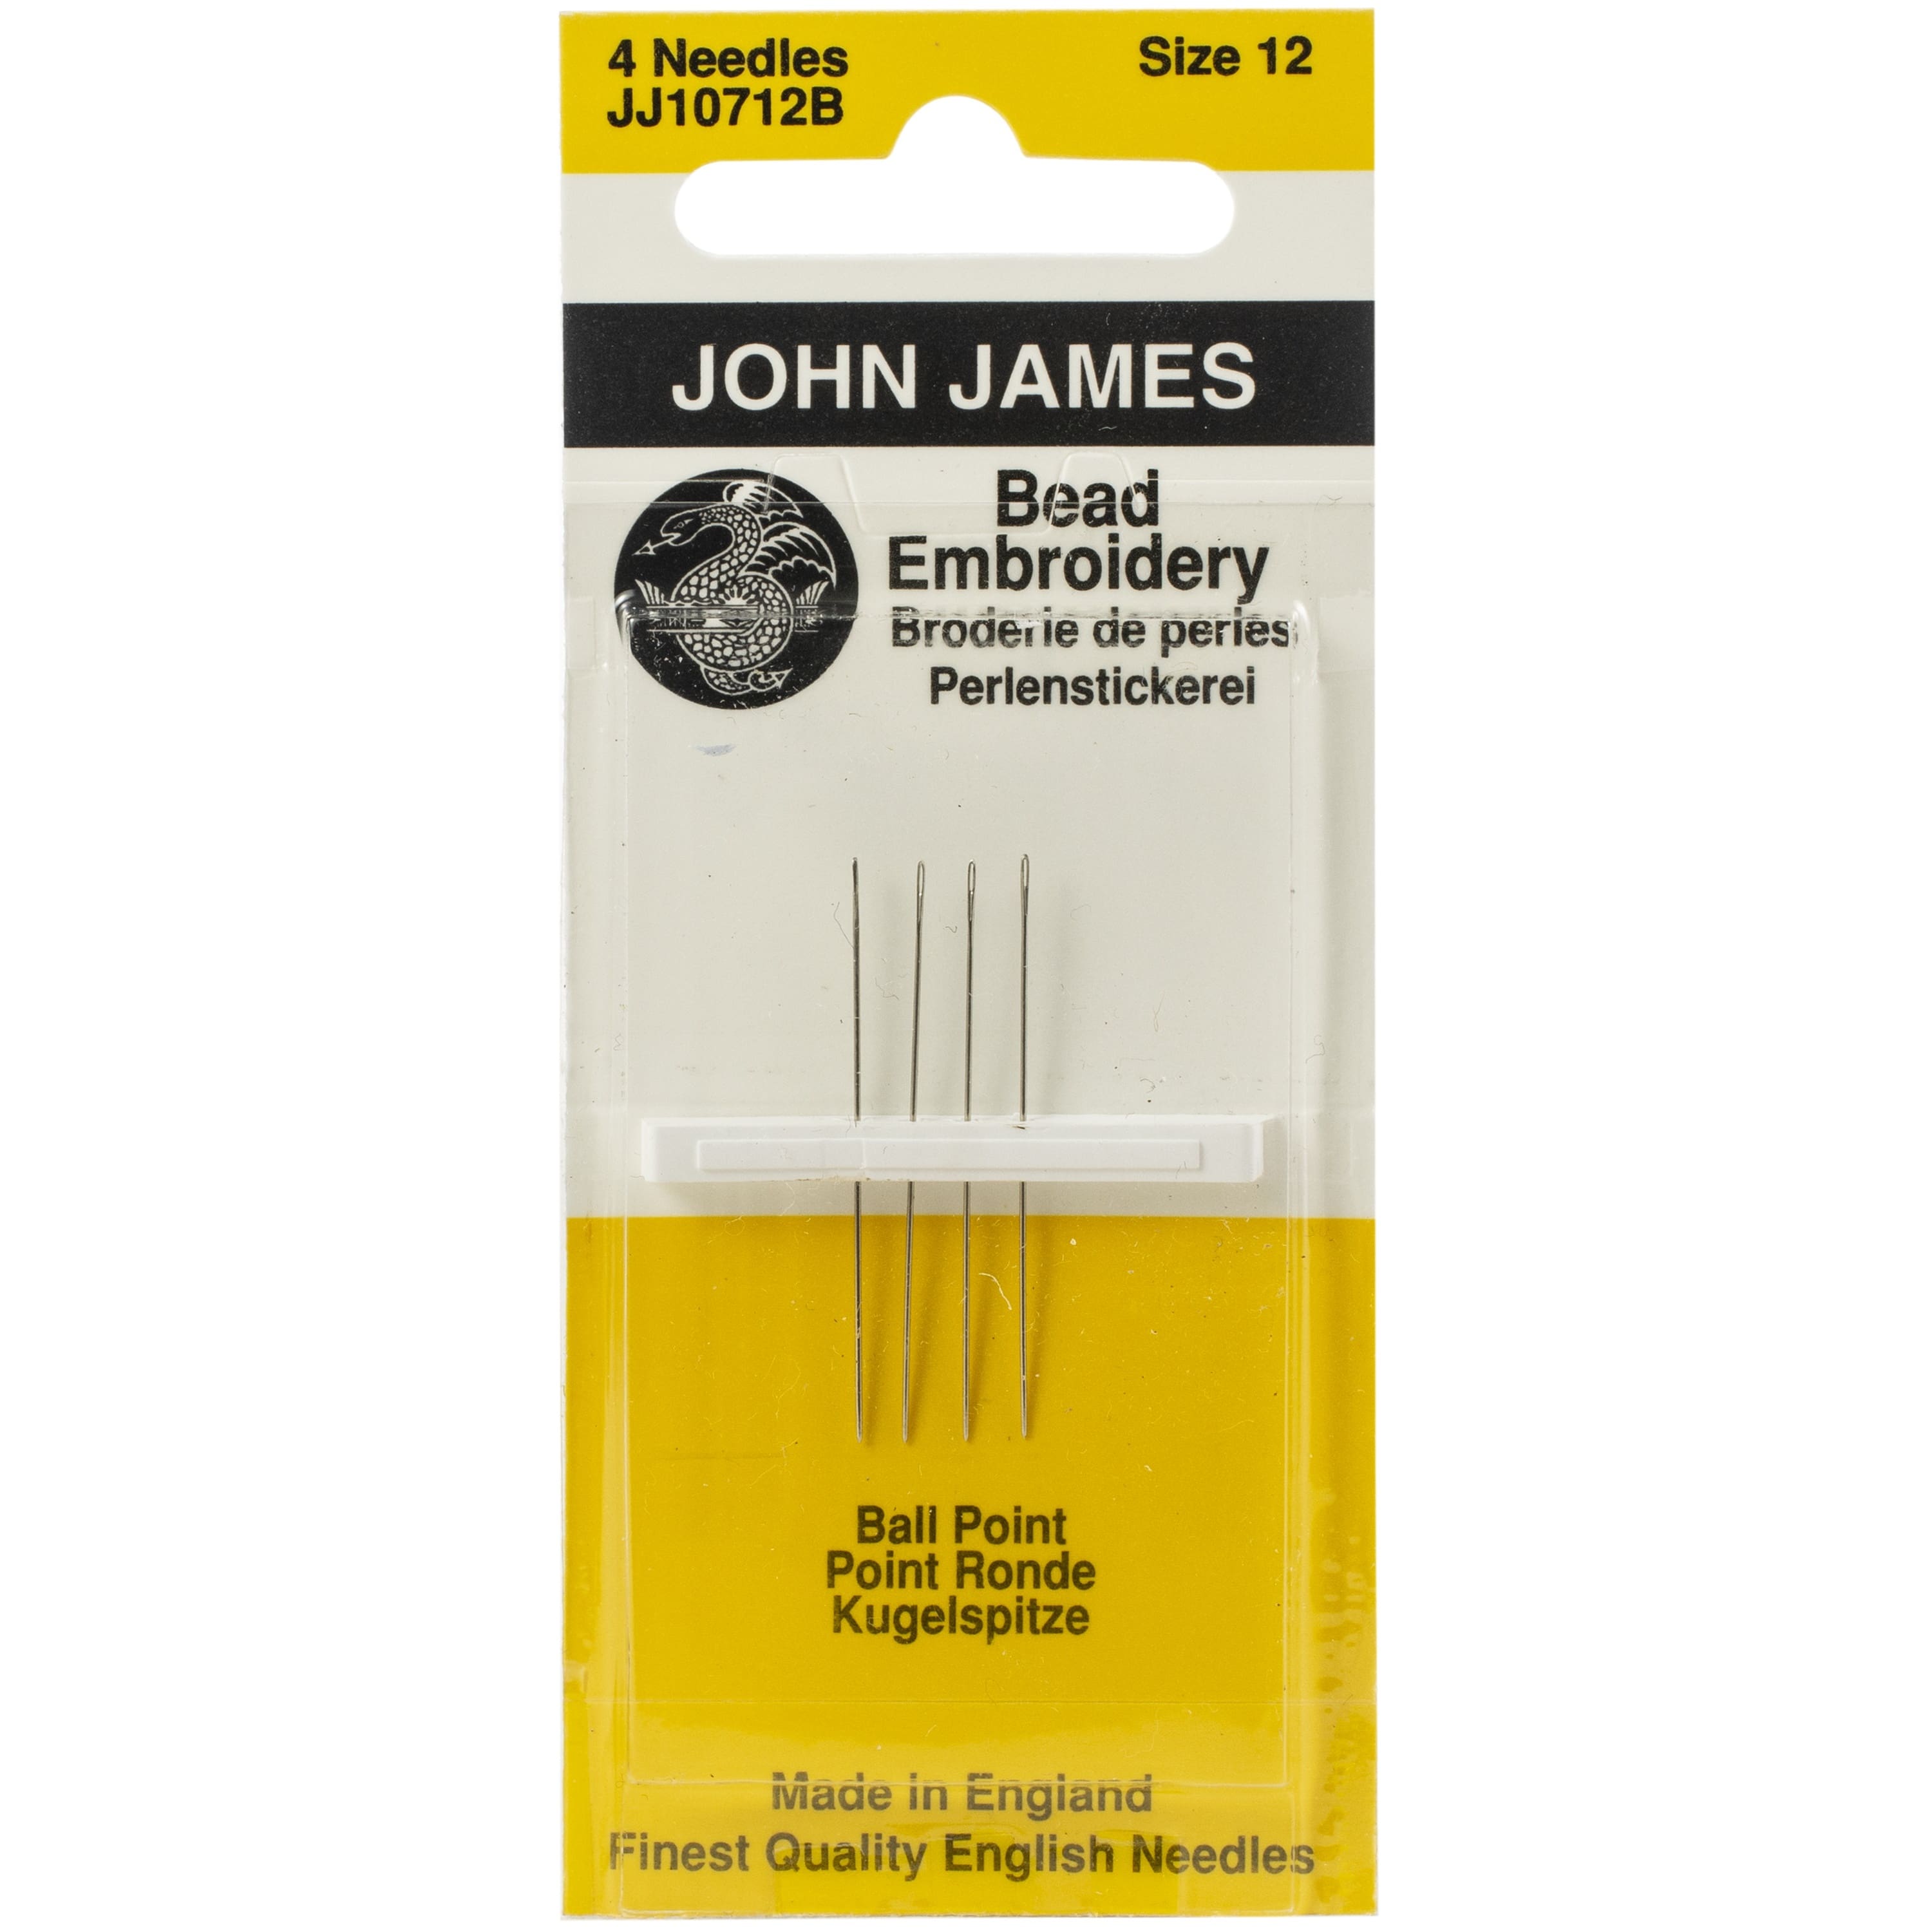 Colonial Needle John James Bead Embroidery Hand Needles, Size 12